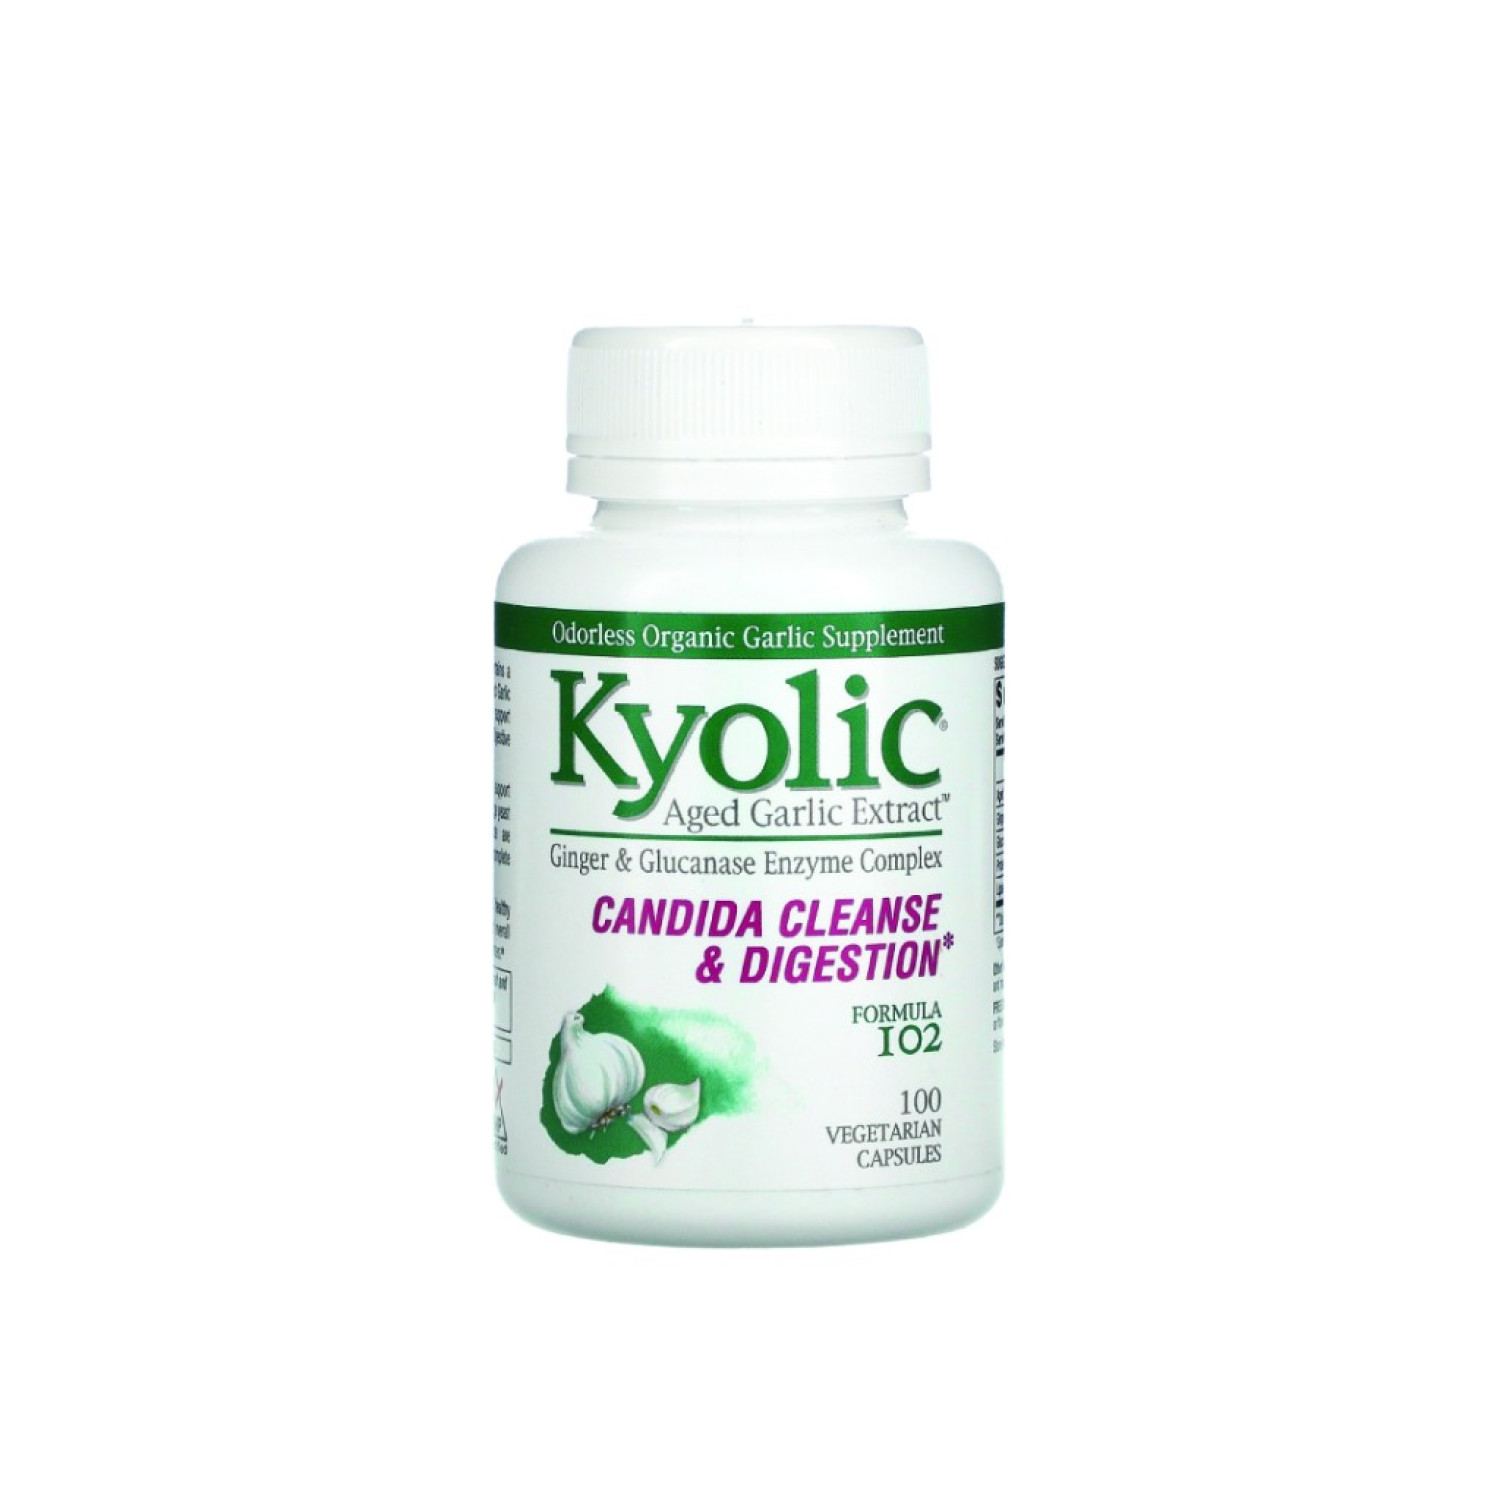 kyolic-102-candida-cleanse-digestive-100-capsules-6543500d9d9dd.jpeg